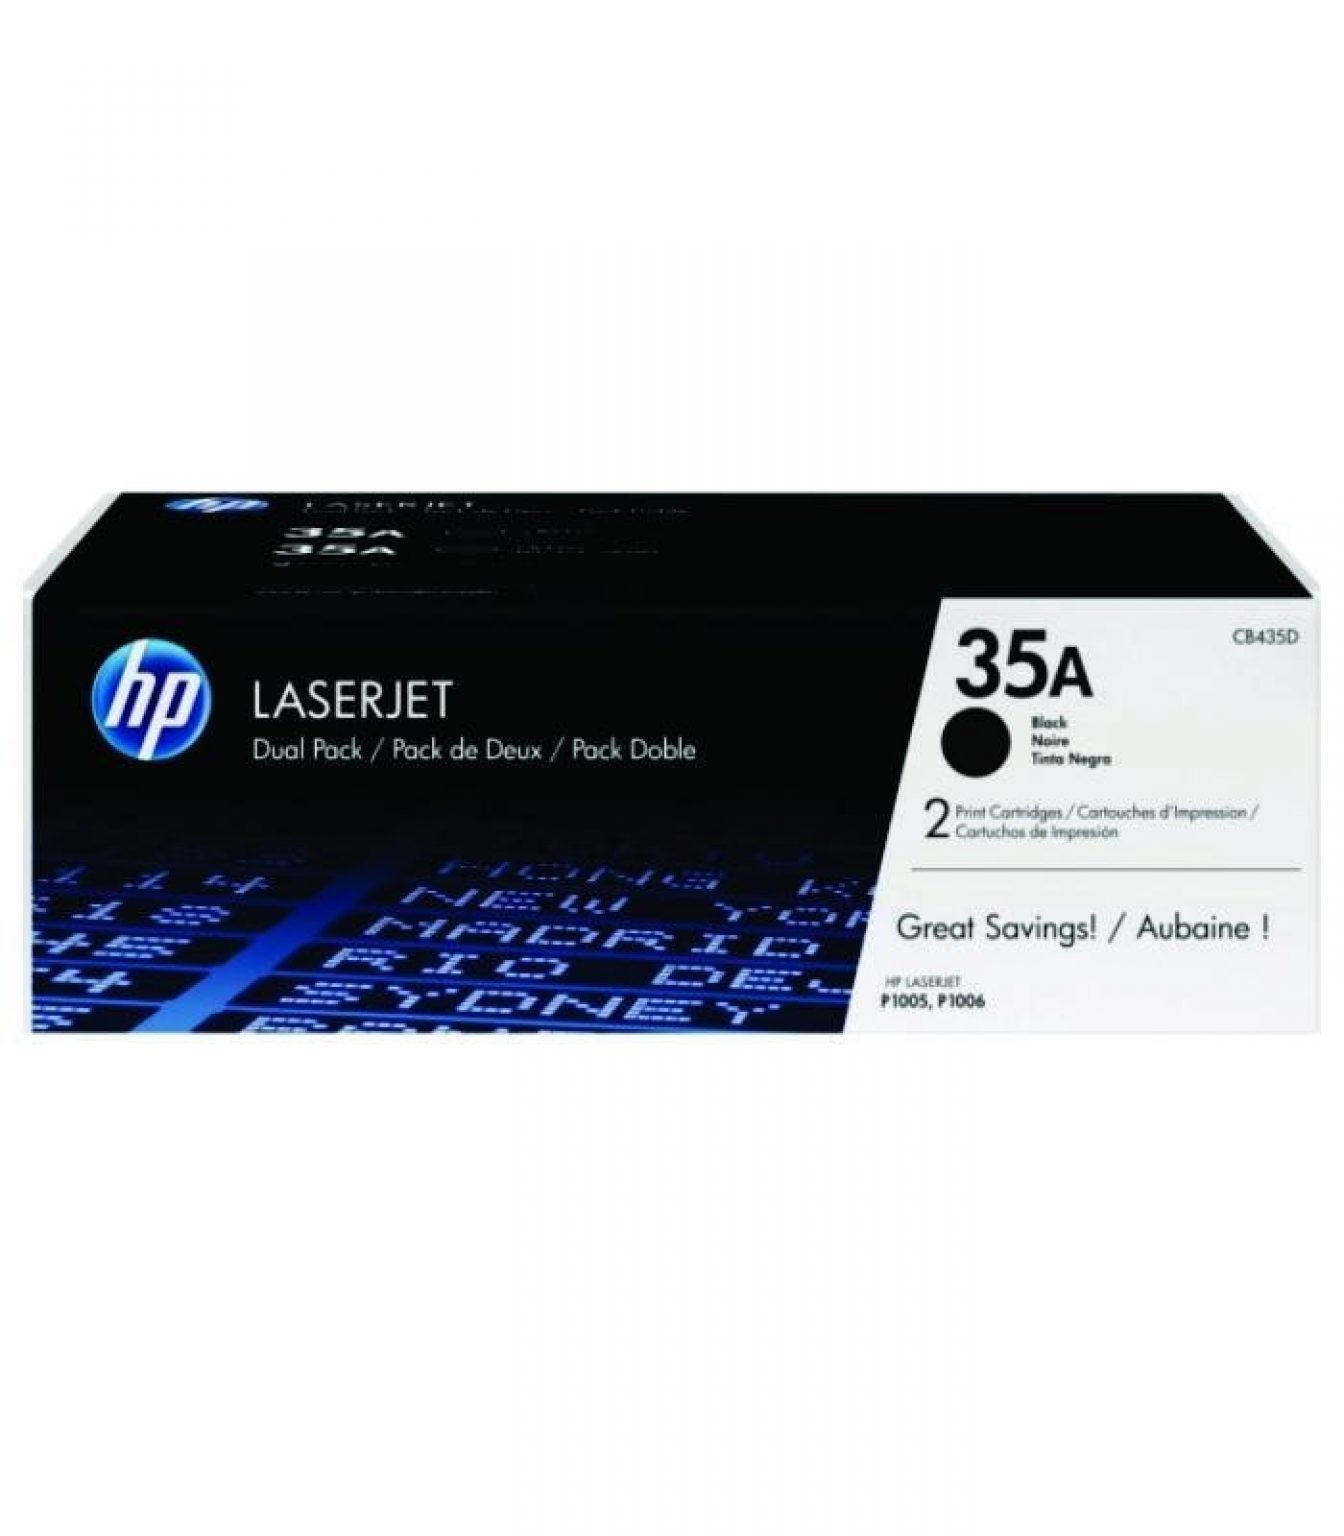 HP - LaserJet P1006 Black Cartridge Dual Pack [CB435AD]